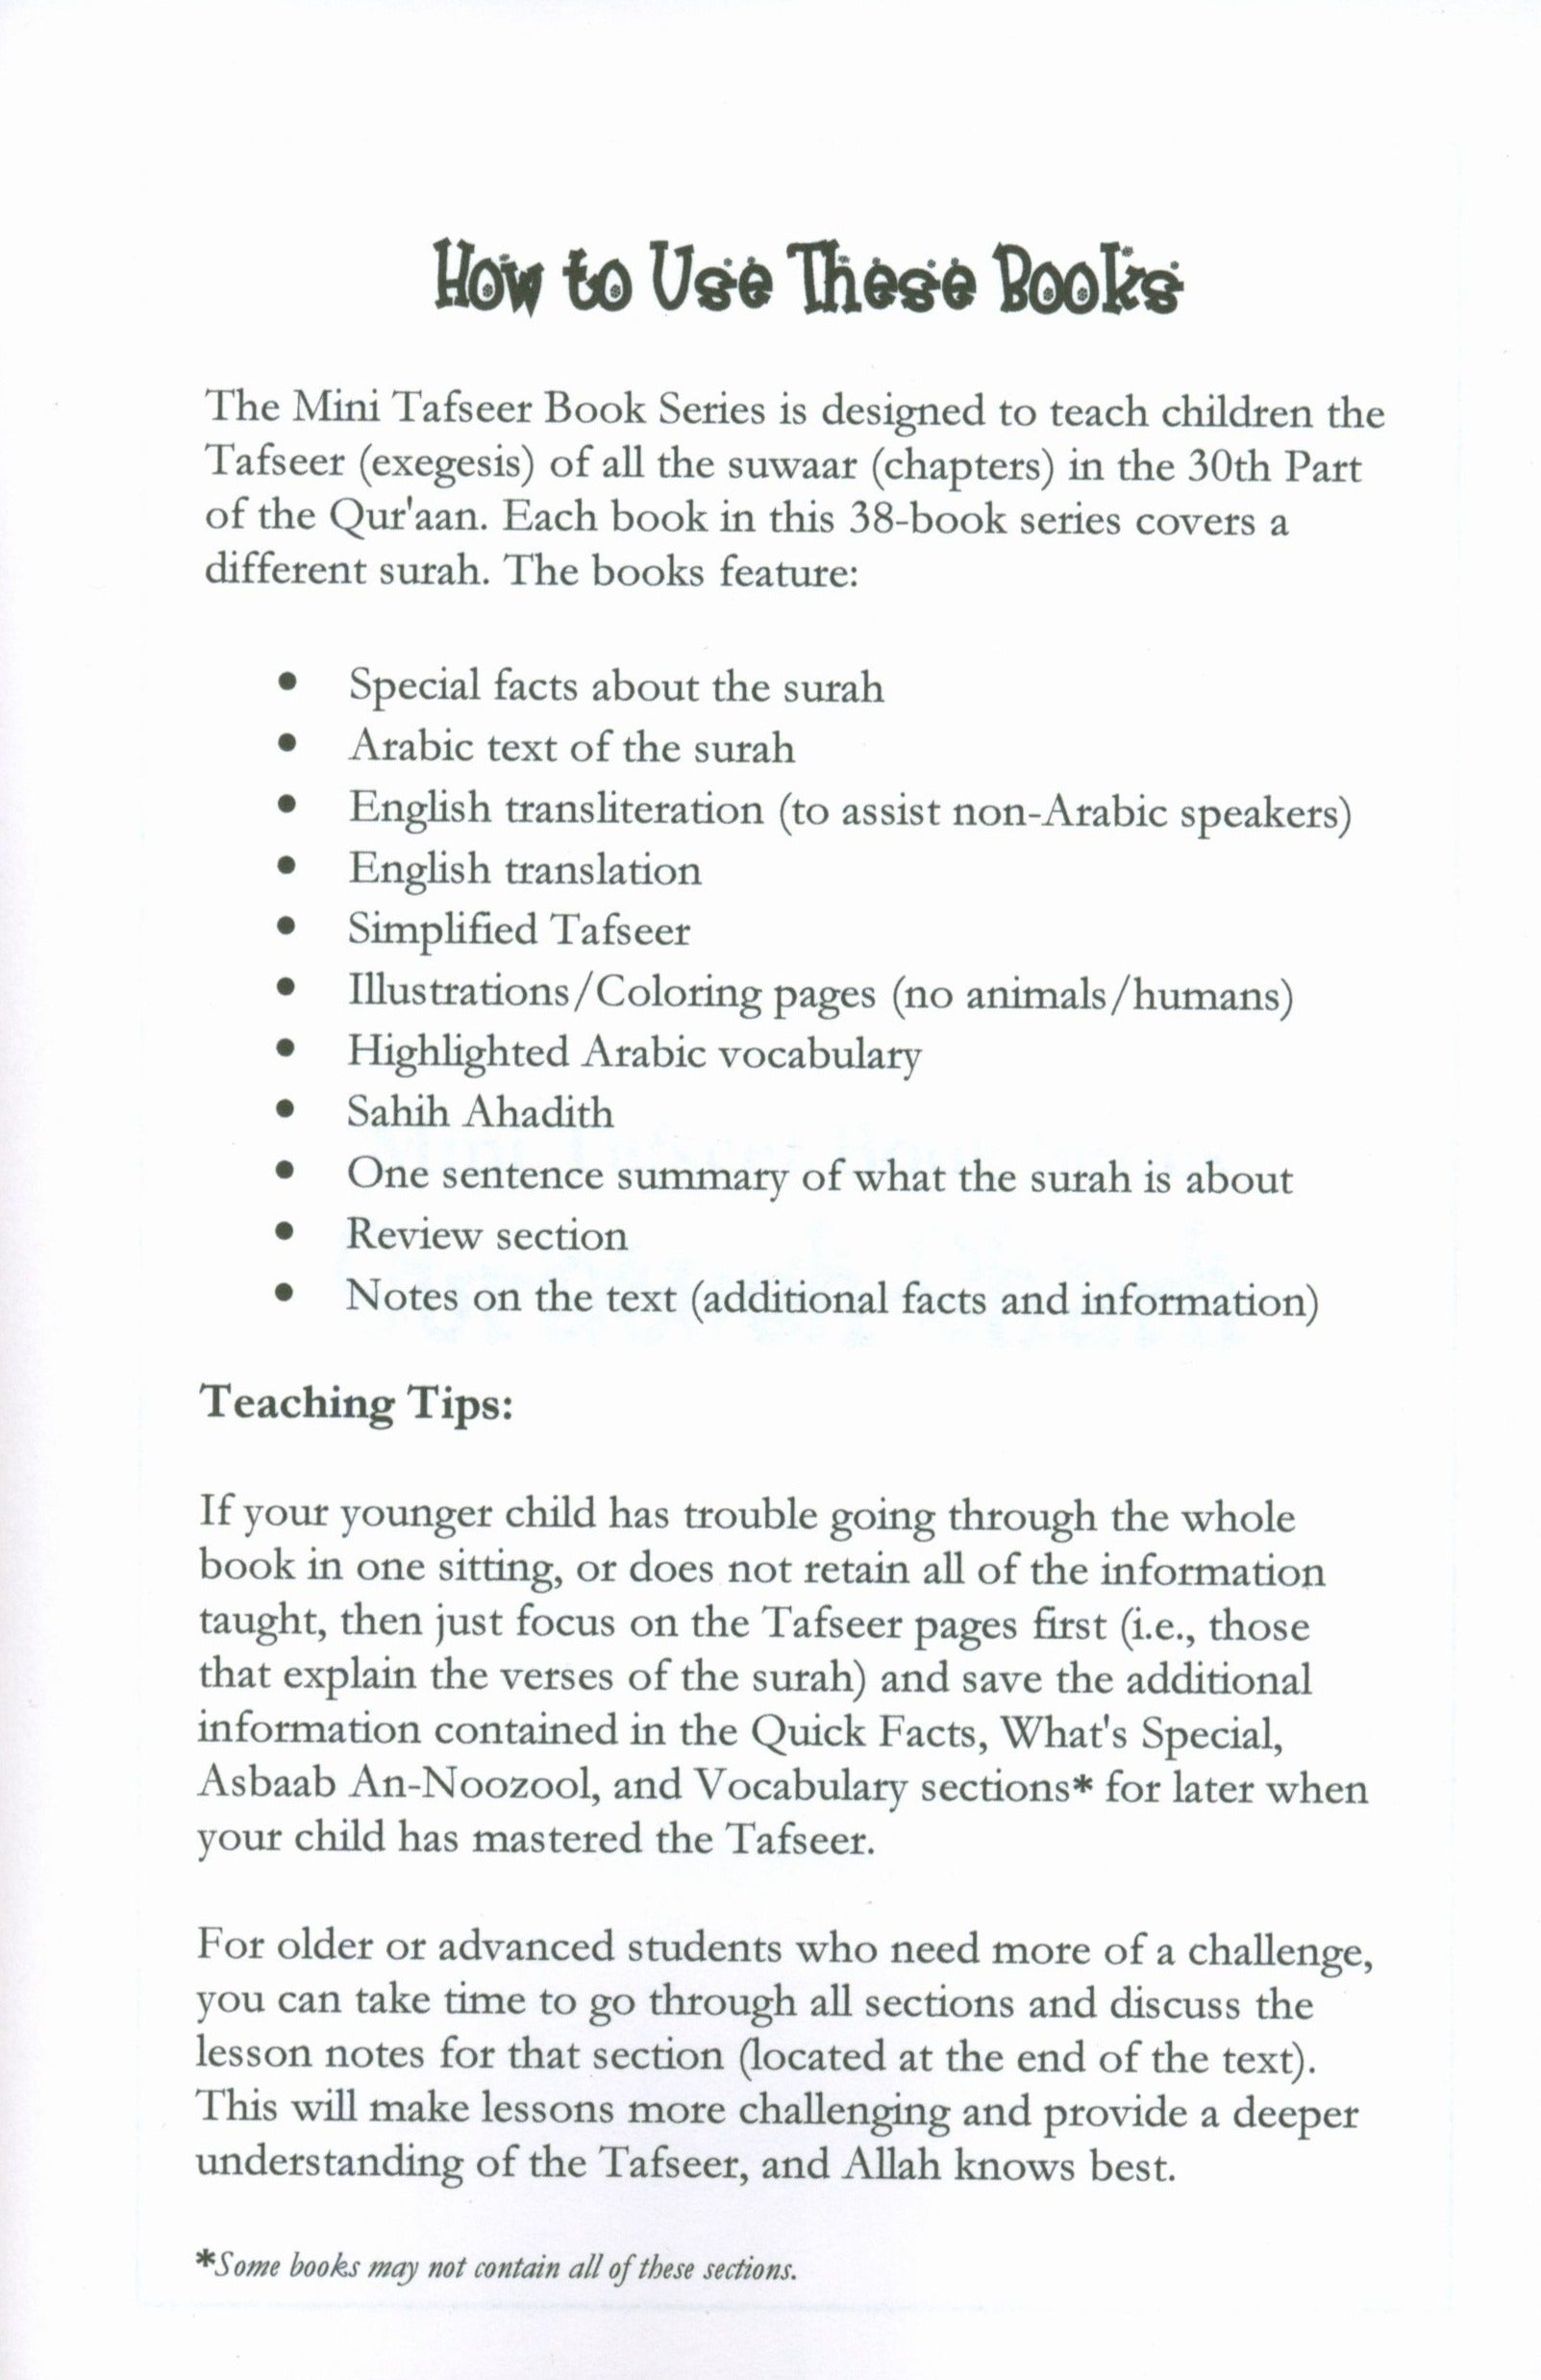 Mini Tafseer Book Suratush Sharh (Surah 94)